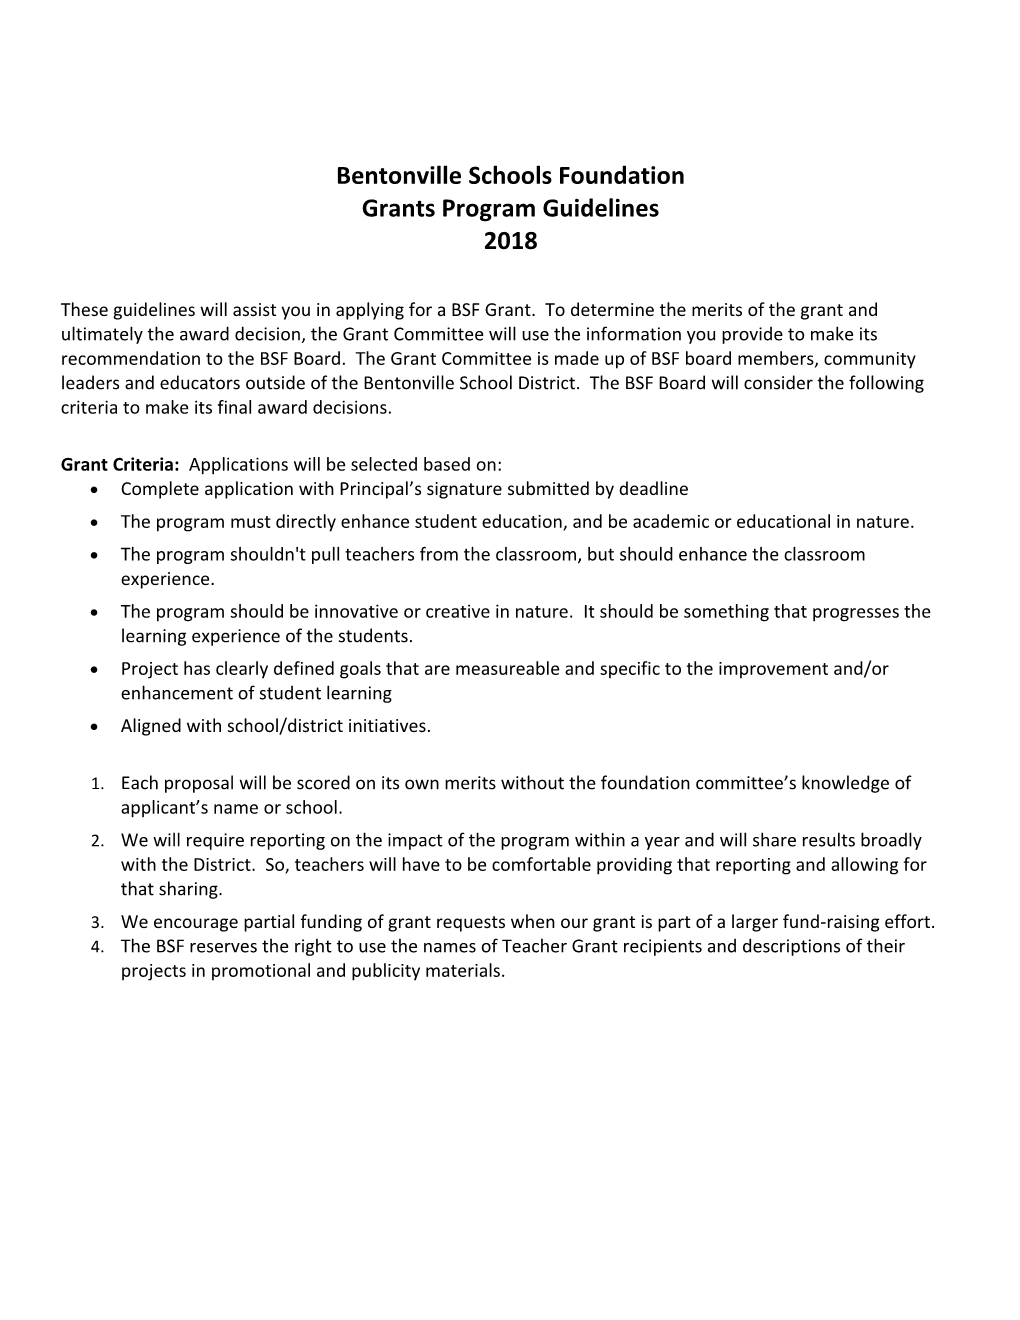 Bentonville Schools Foundation Grants Program